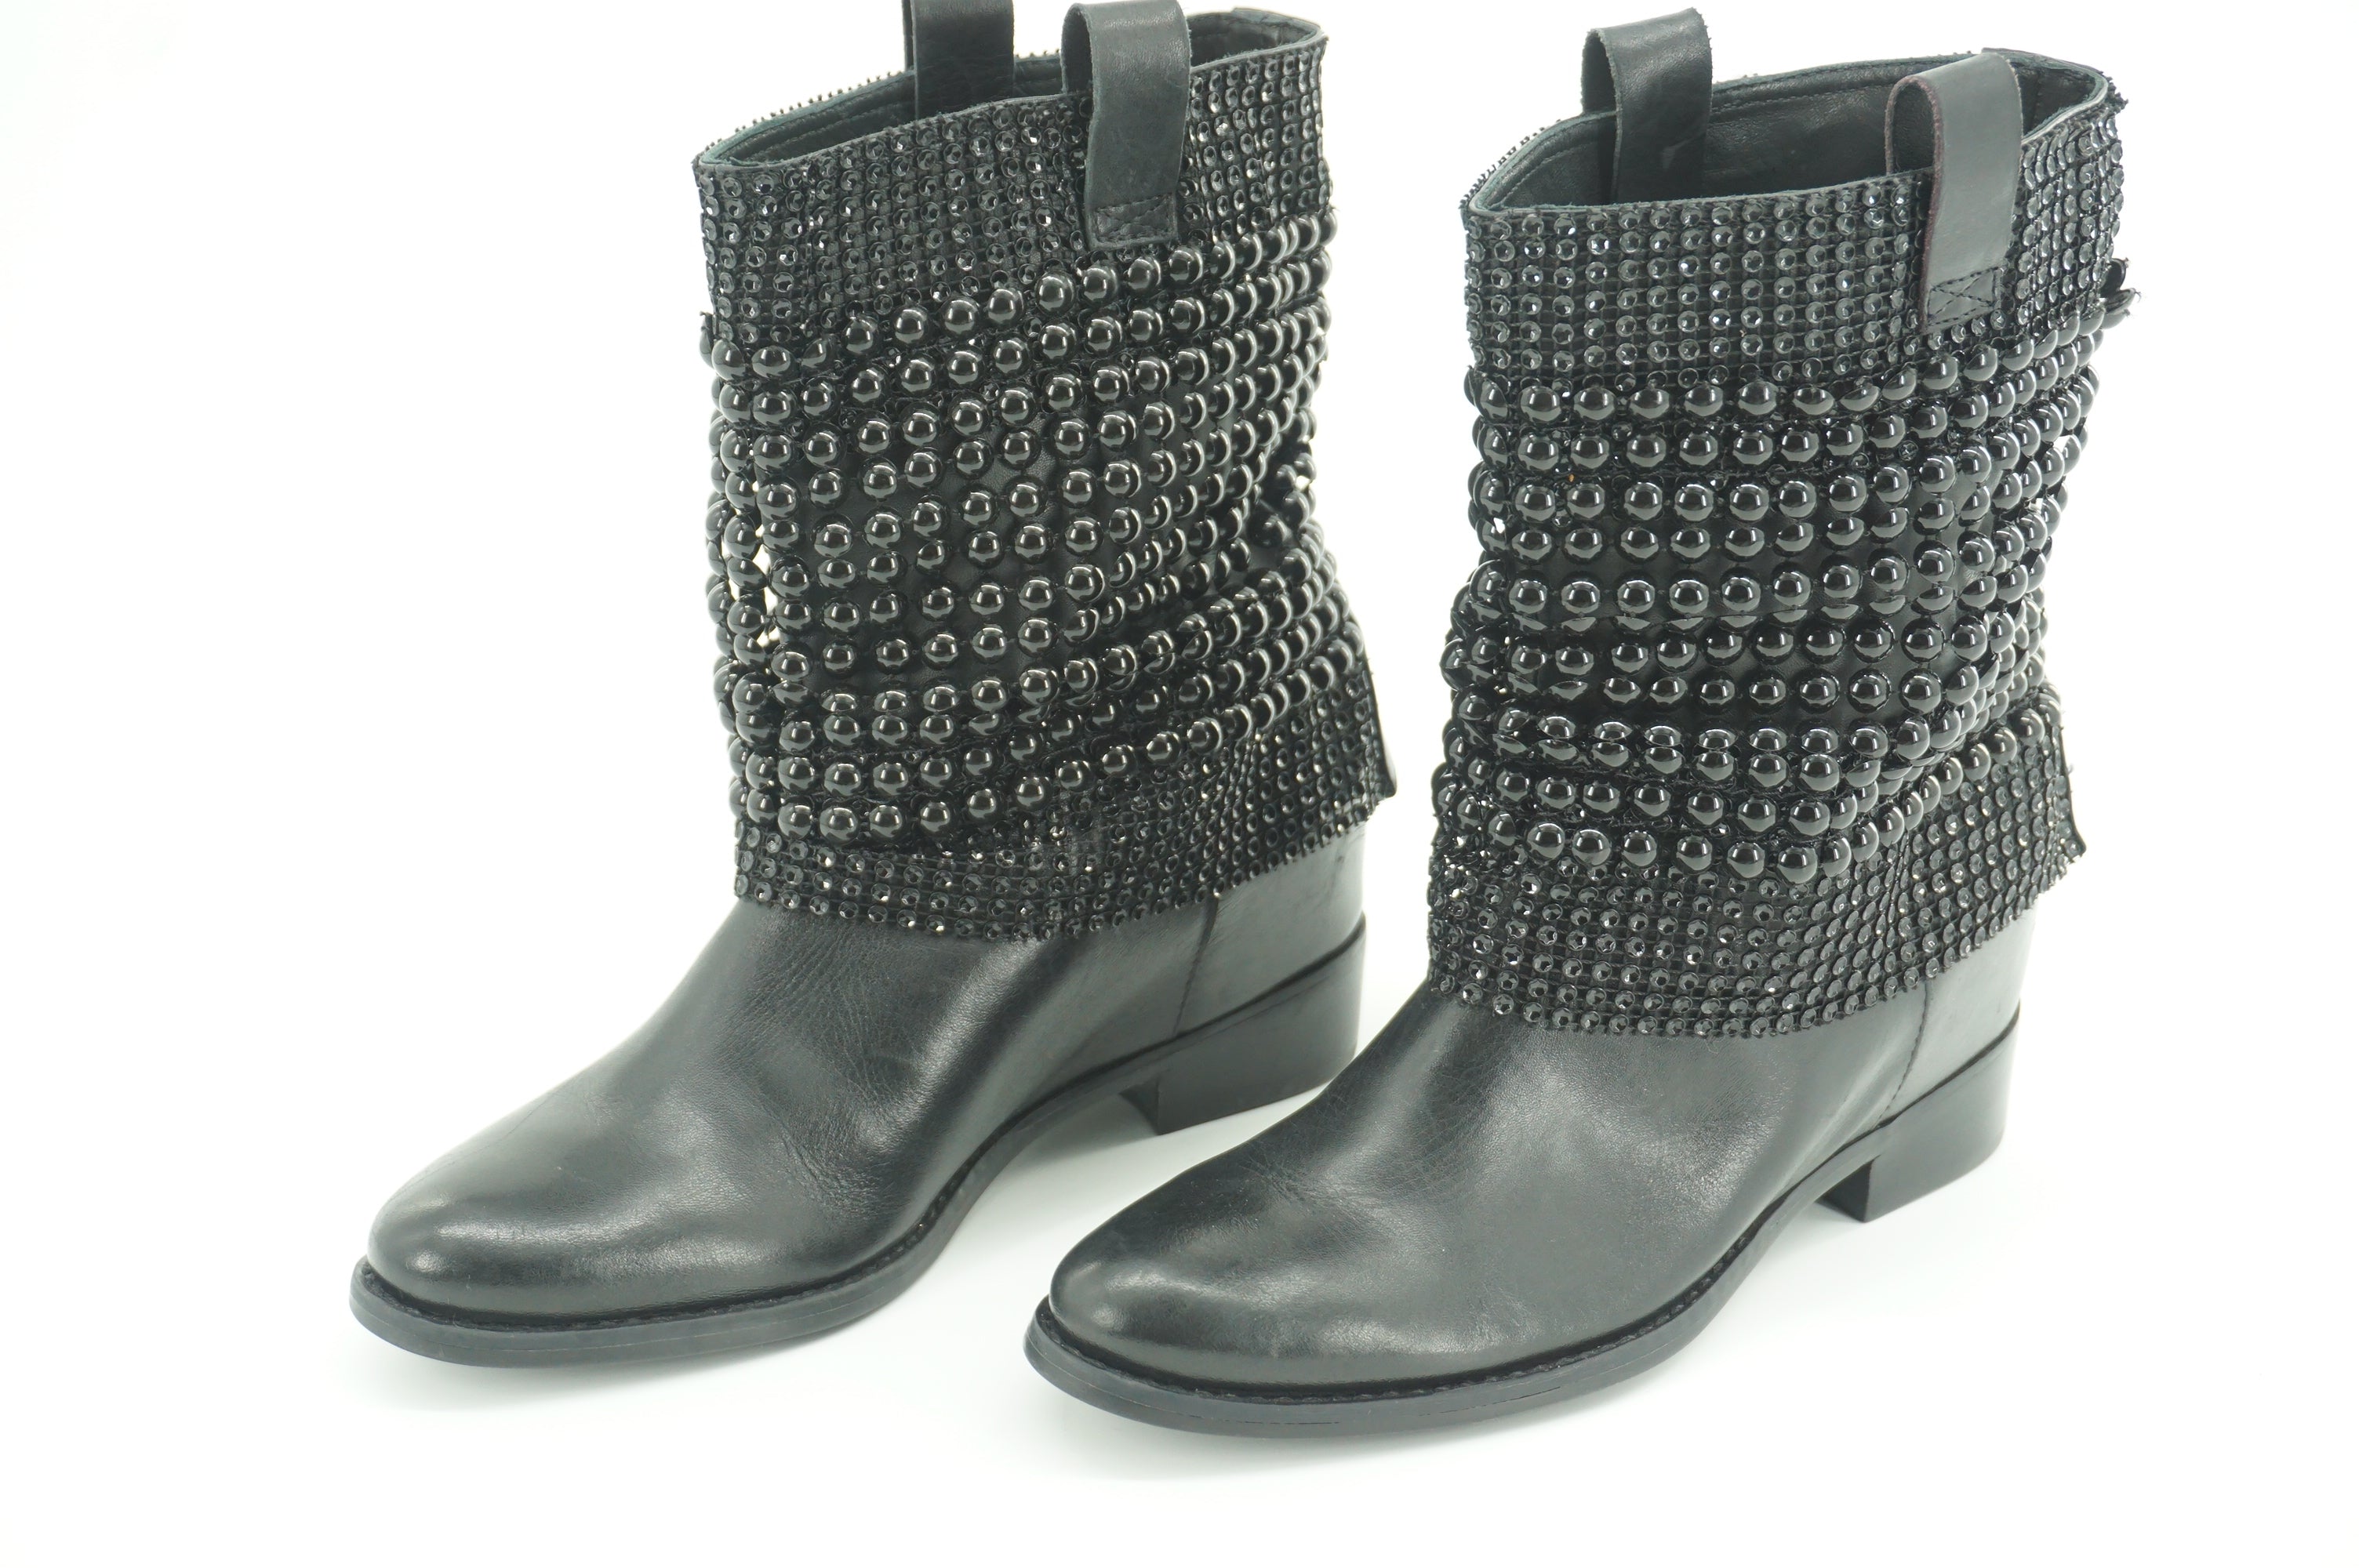 Schutz Bead-embellished Ankle Boots Boots SZ 6 Black Leather Hidden Heel $190